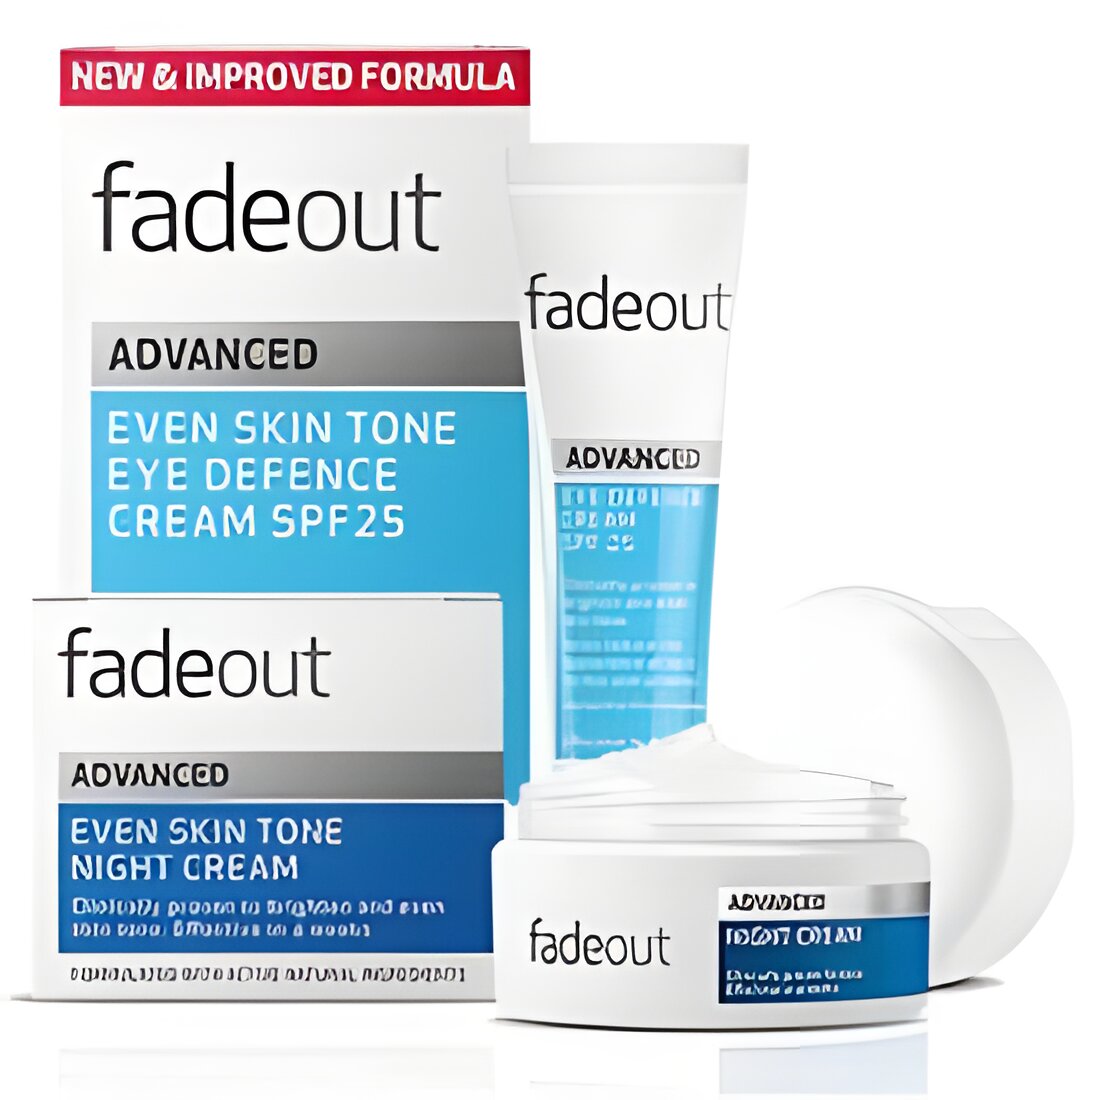 Free Fadeout Skin Care